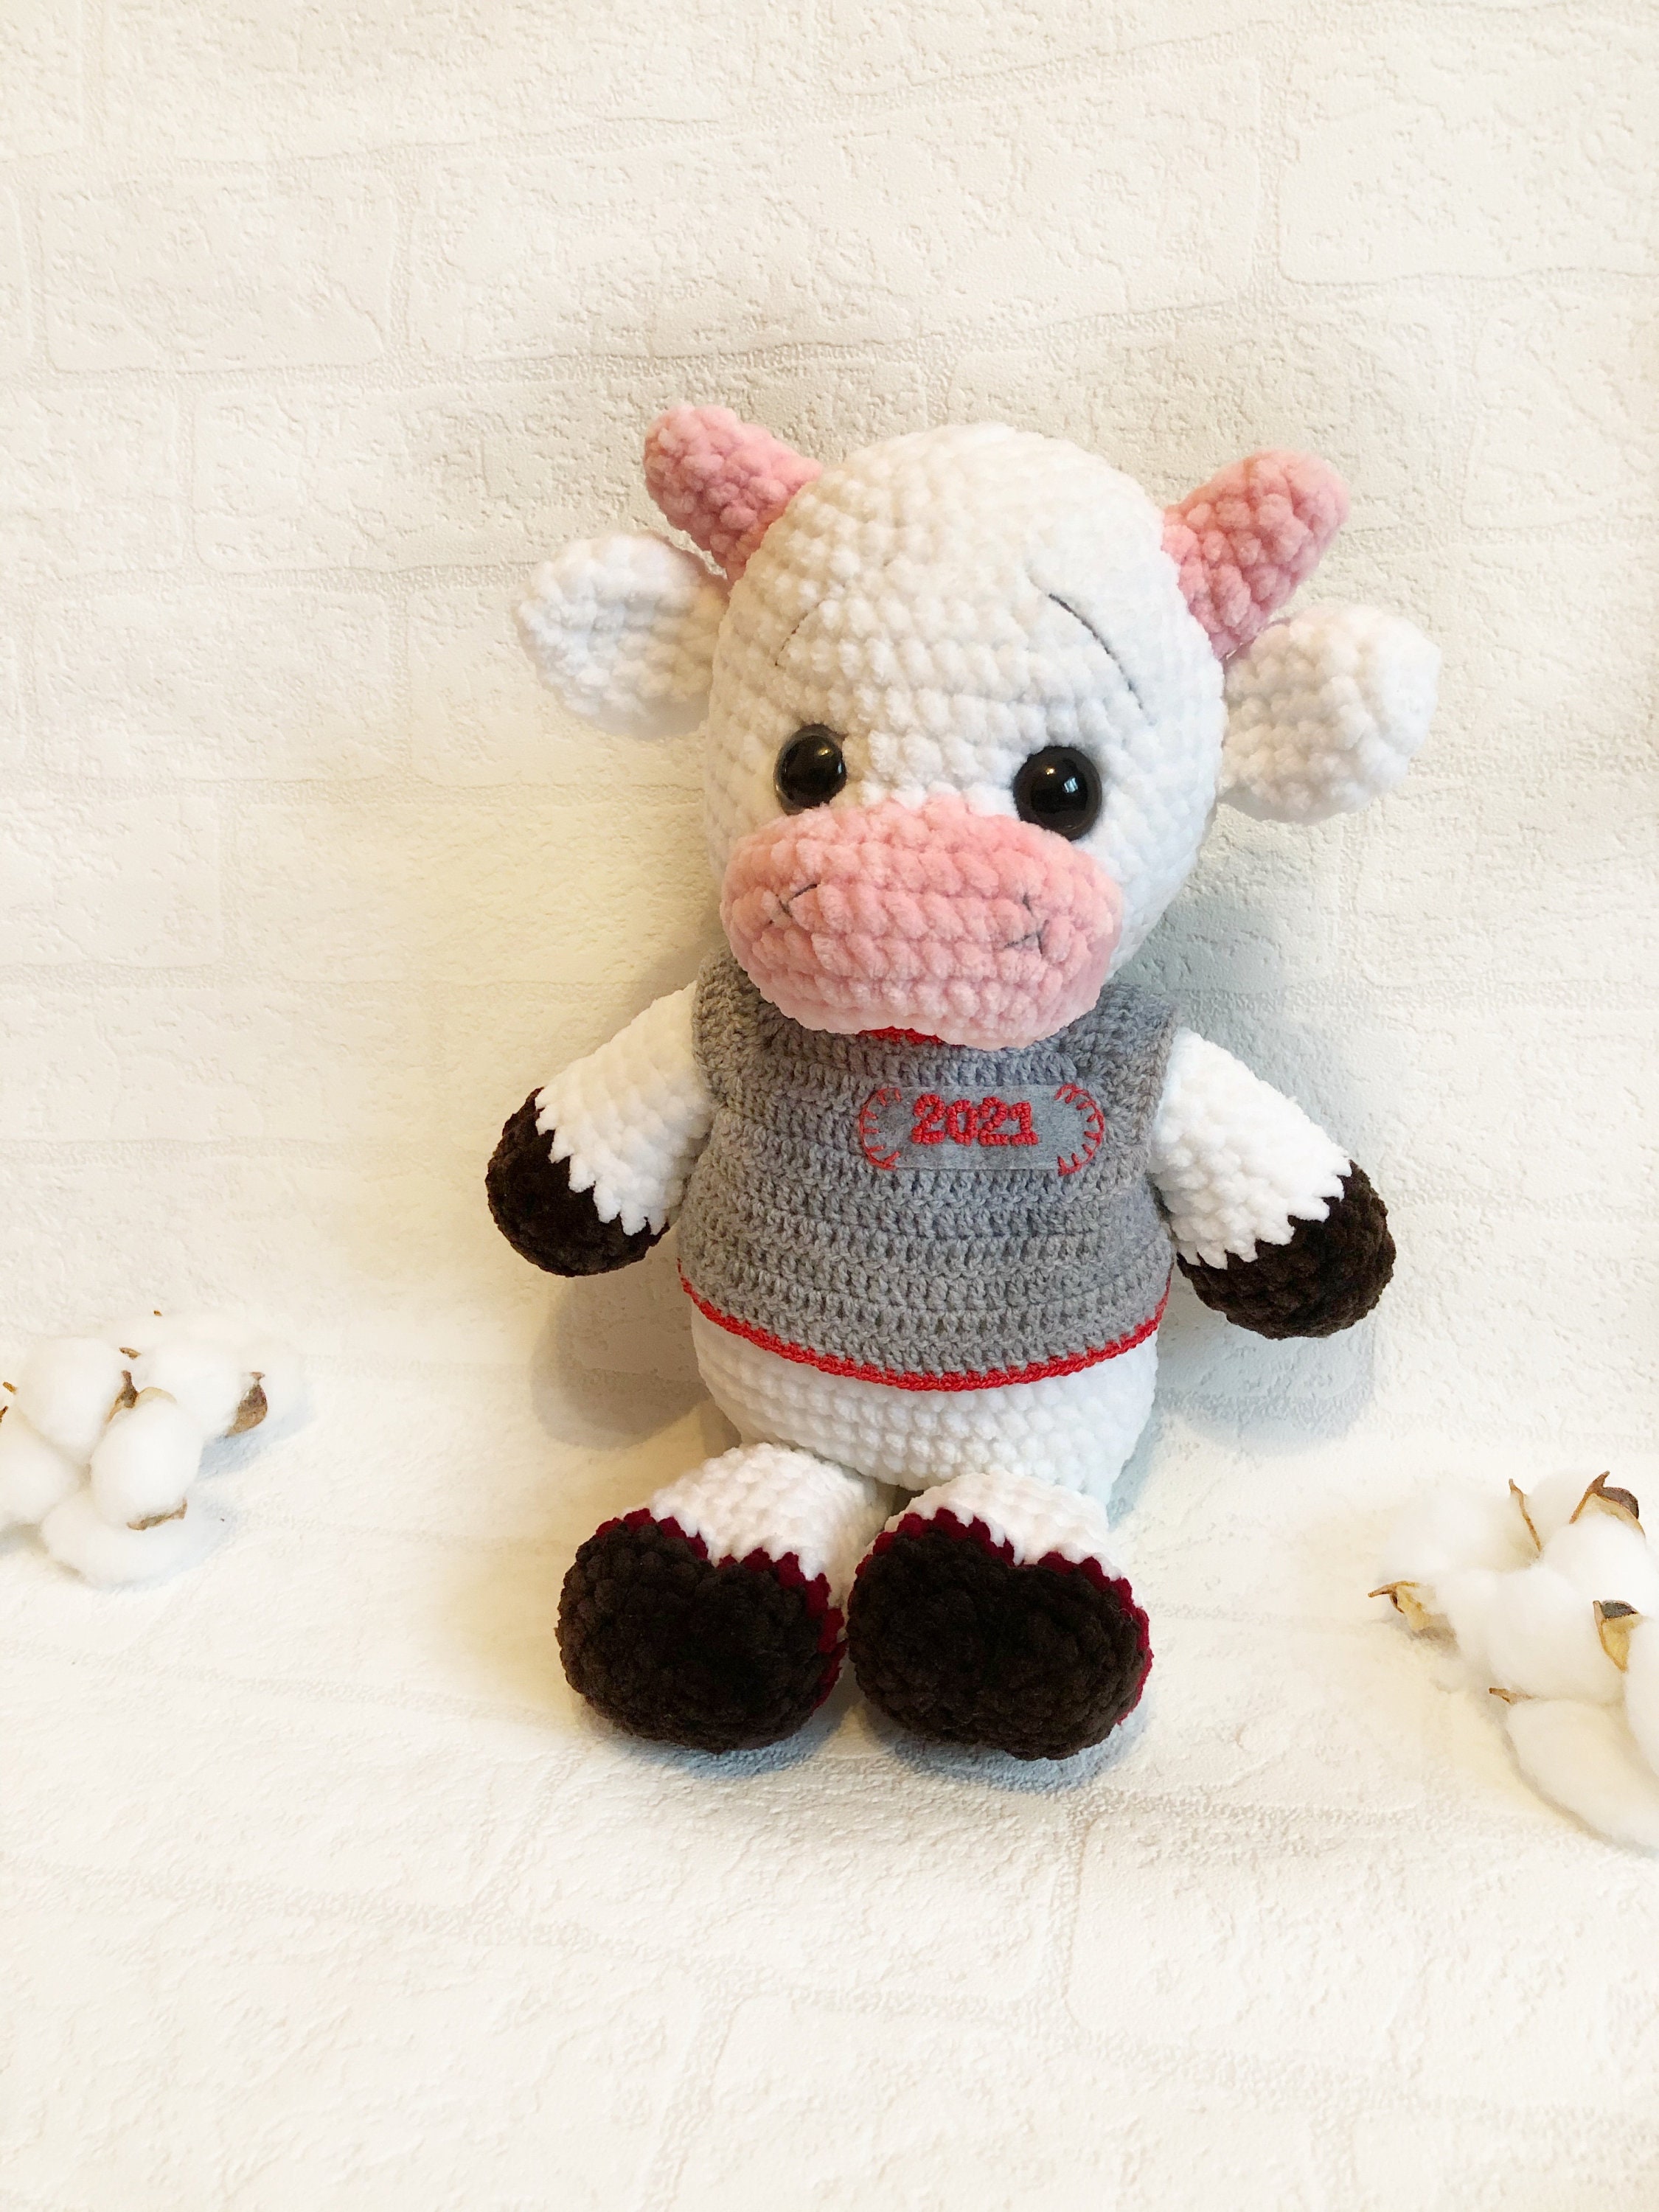 Handmade Bull Crochet Bull Toy Funny Bull Symbol of 2021 Crochet Animals Bull Toy, New Year Bull New Year's Gift Amigurumi Bull